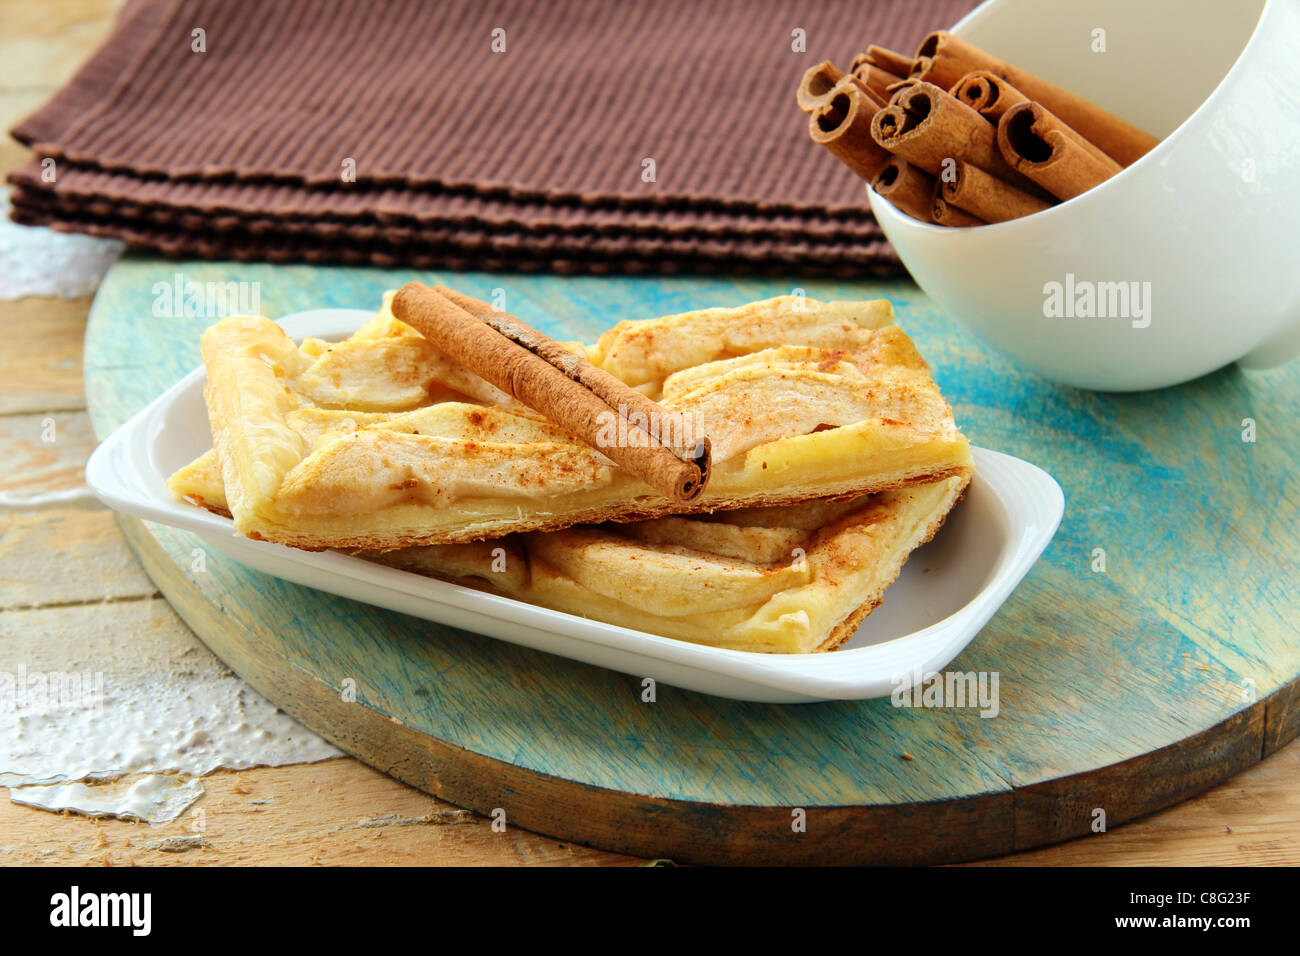 Homemade apple pie and cinnamon stick Stock Photo